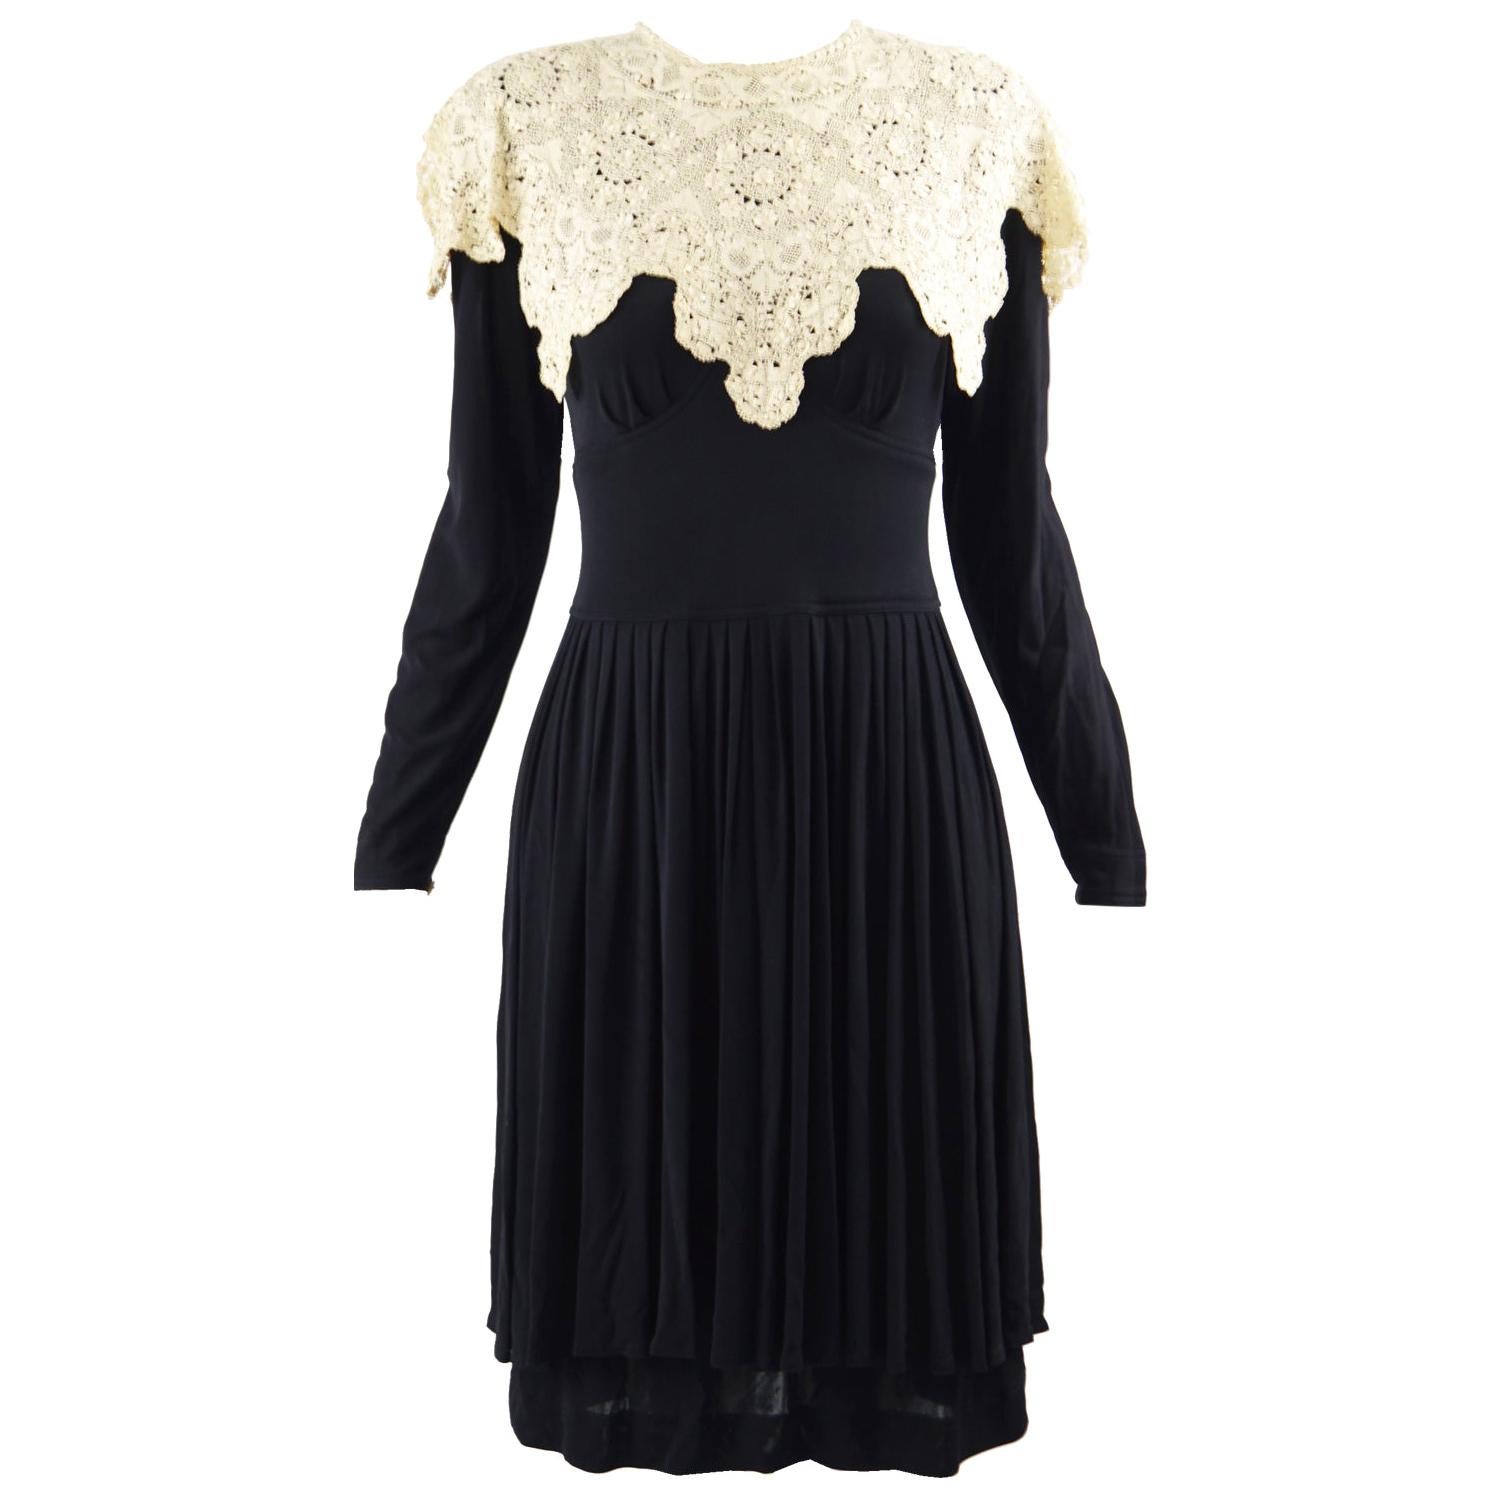 Jean Muir 1970s Black Jersey Dress